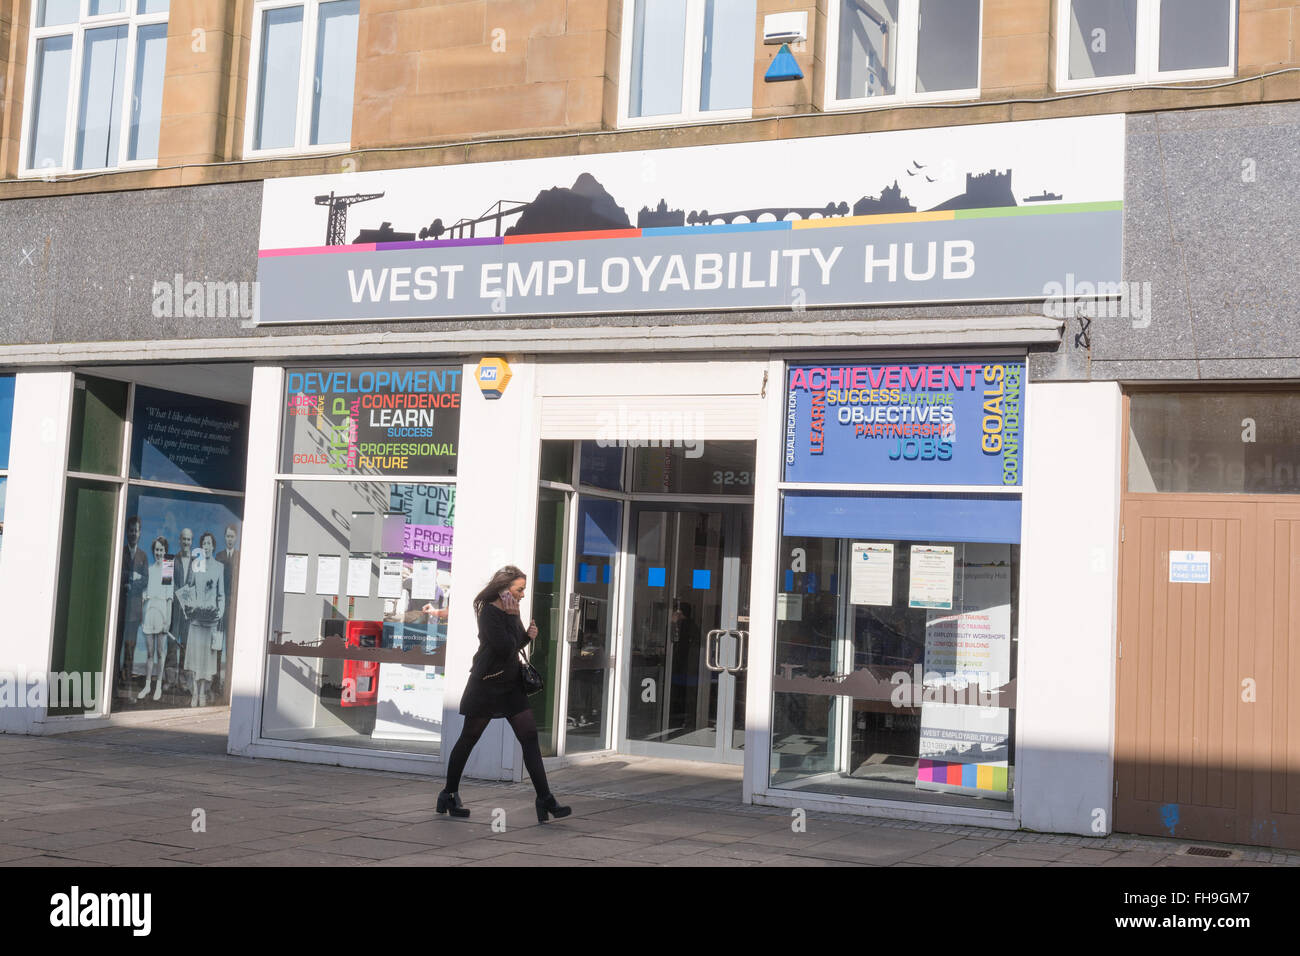 West Employability Hub - a job centre for young people - Dumbarton, West Dunbartonshire, Scotland, UK Stock Photo